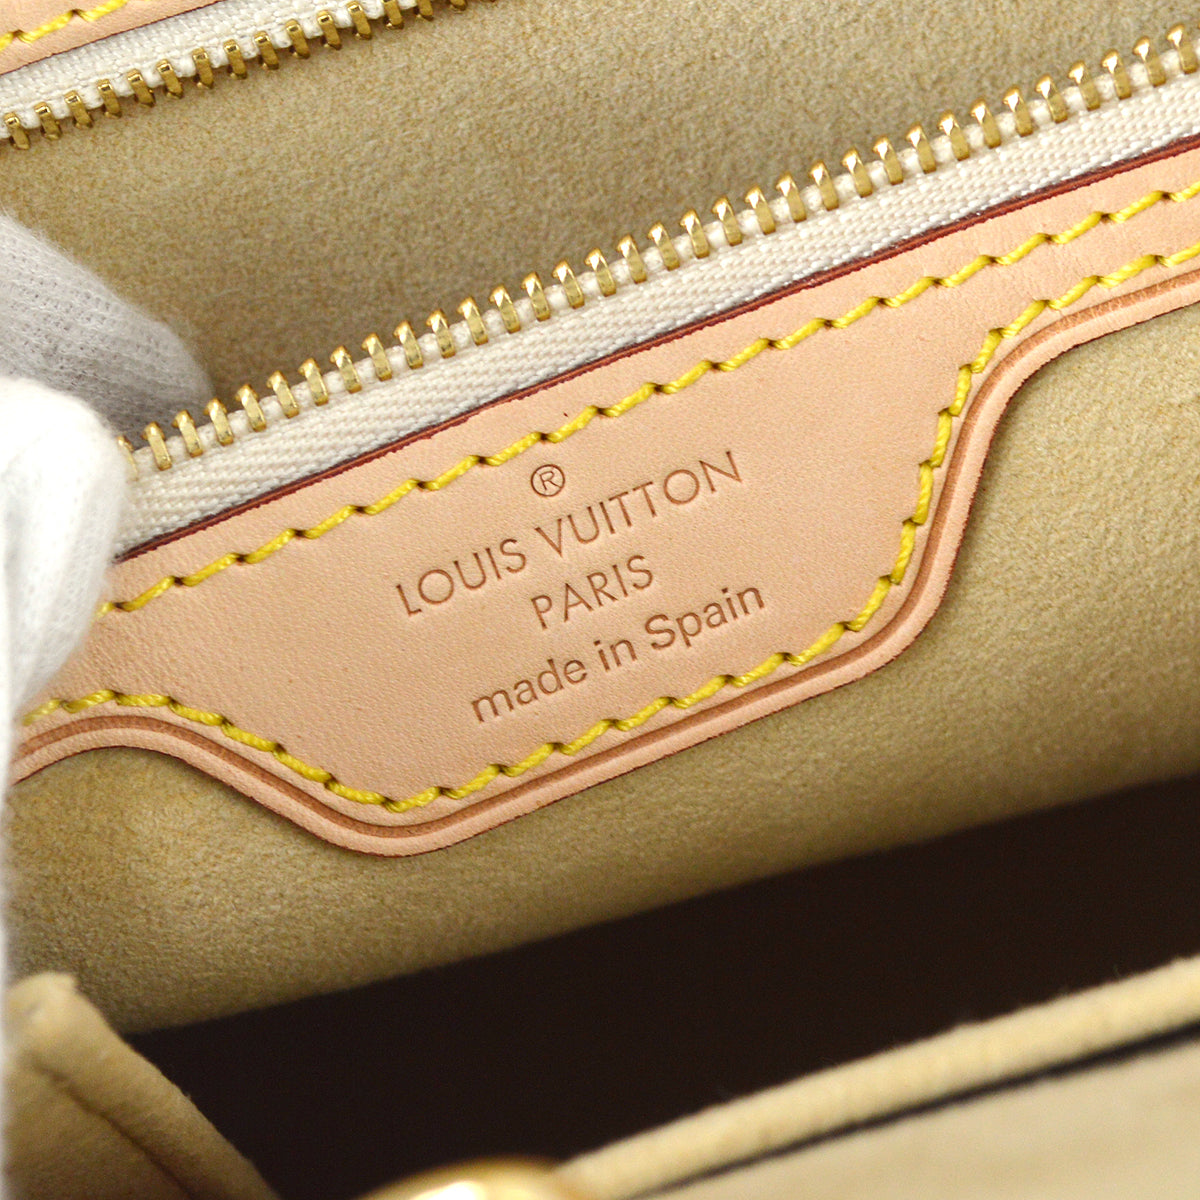 Louis Vuitton 2011 Damier Azur Hampstead PM Tote Handbag N51207